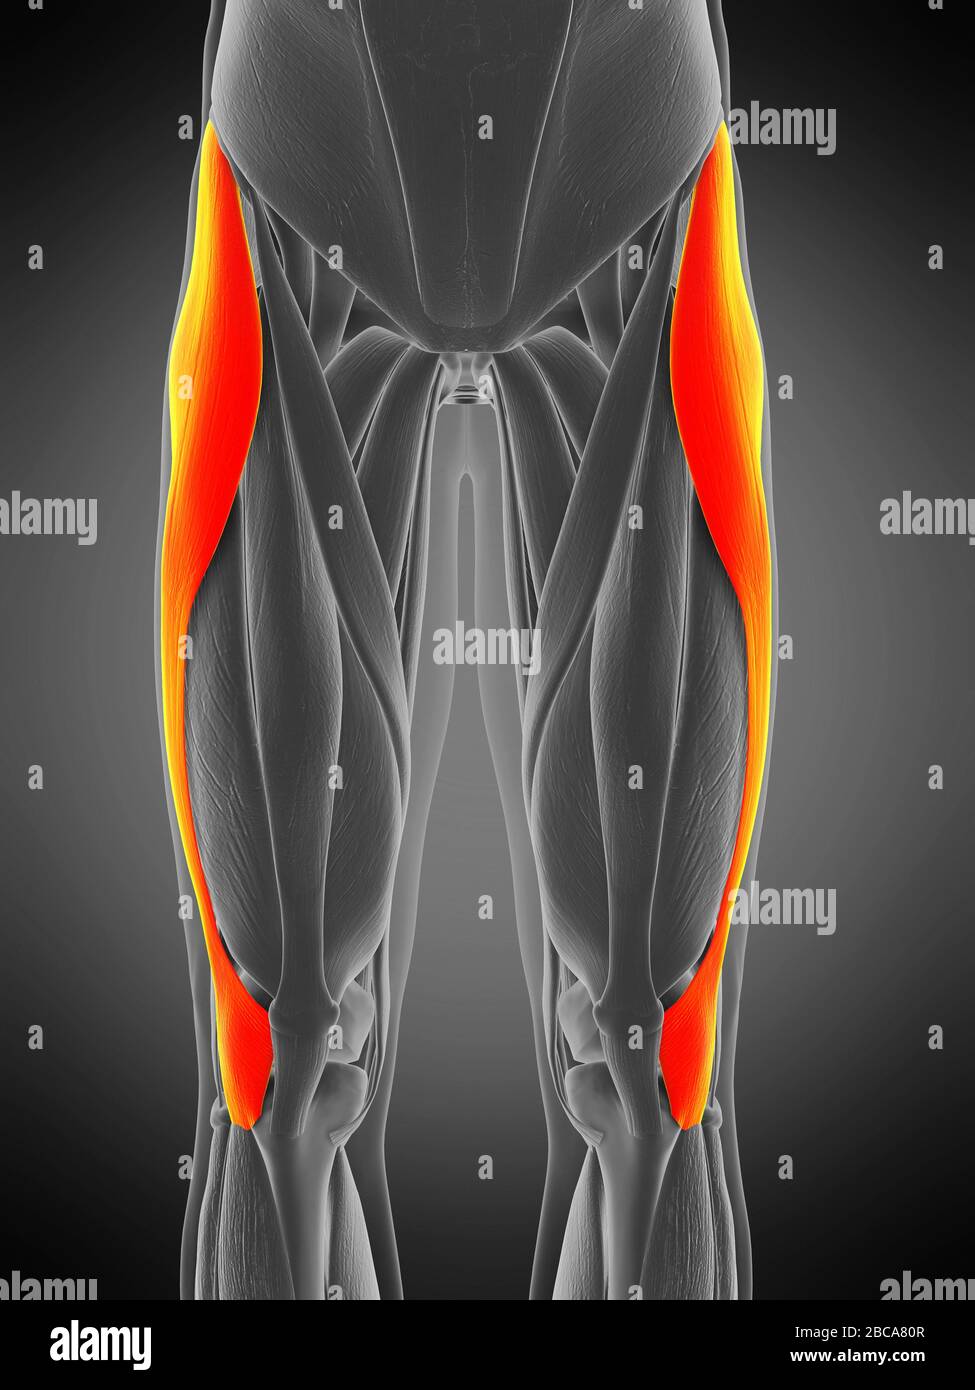 Muscle Tensor Fascia Lata Illustration Photo Stock Alamy